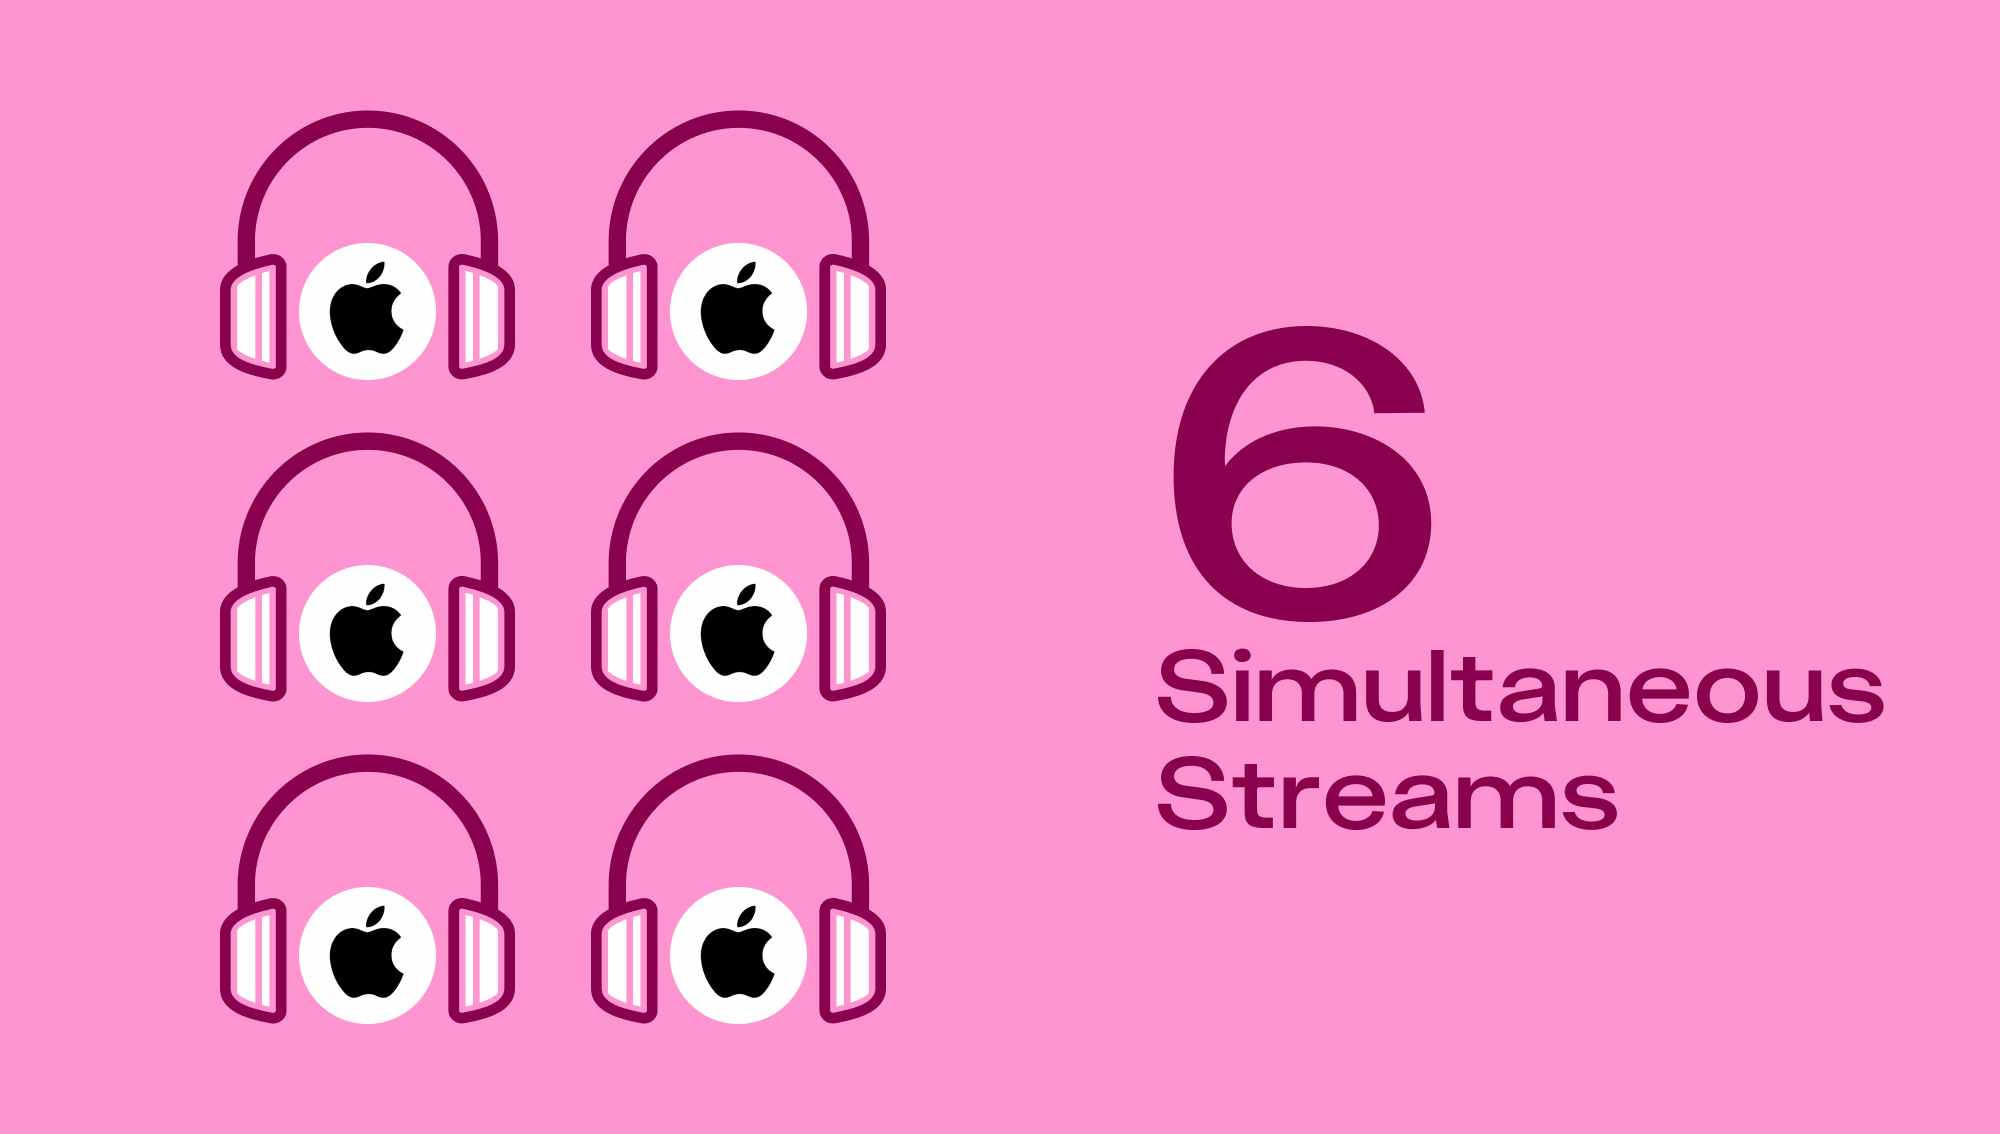 Apple Music offers 6 simultaneous streams